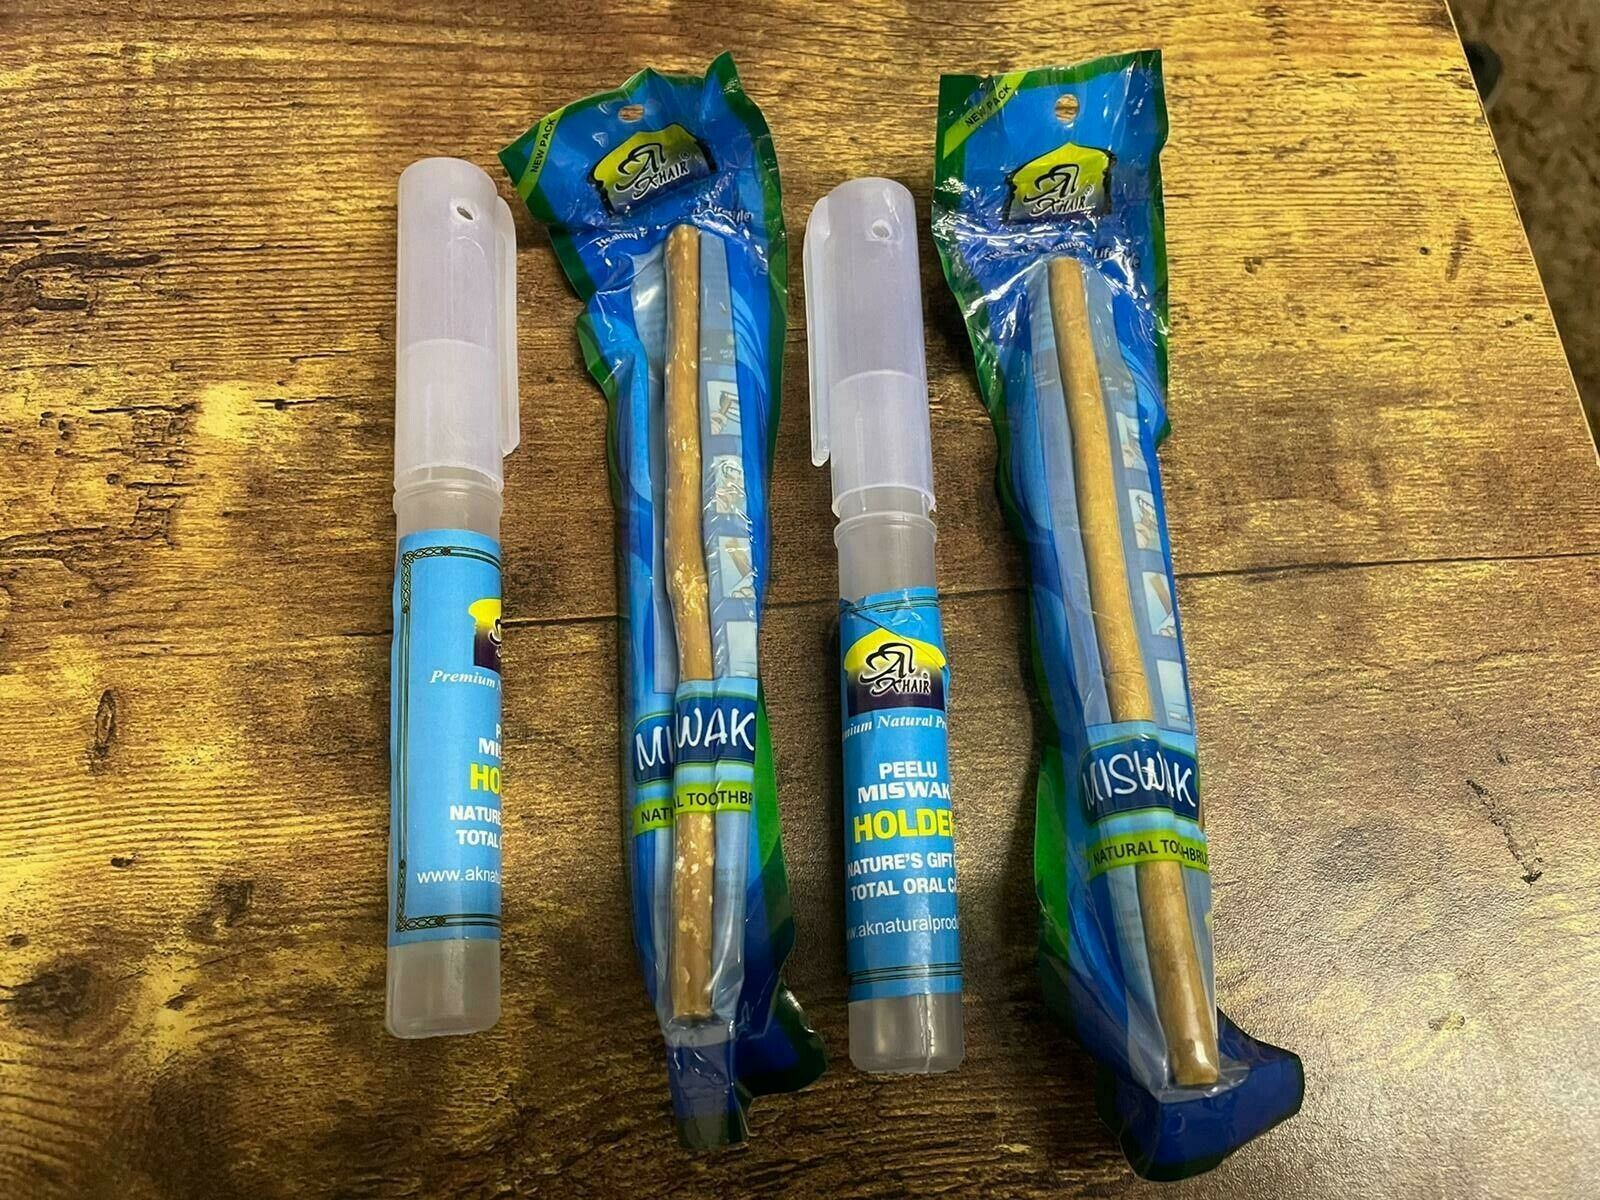 Al Mubarak Miswak Dental Toothbrush With Hygienic Holder Siwak Sunnah Brush Gift